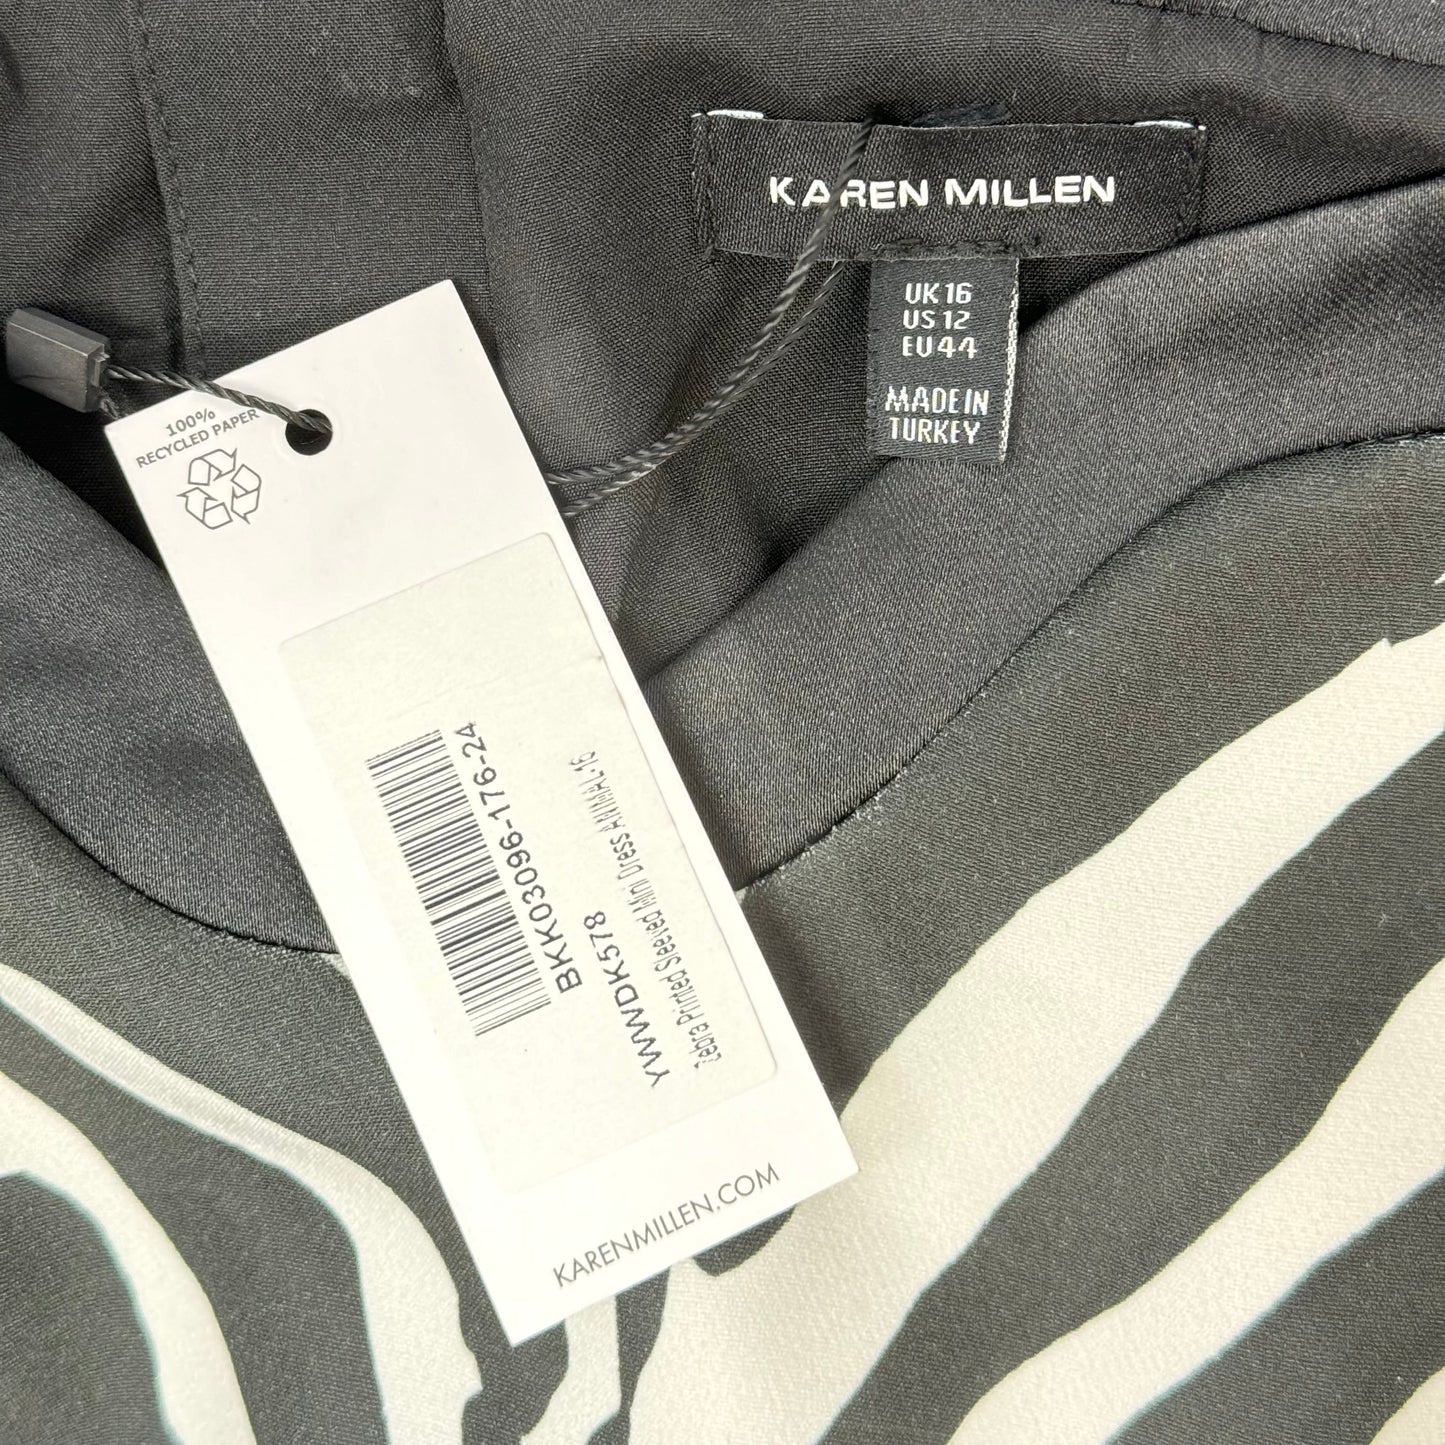 Zebra Printed Sleeved Mini Dress
Designer Karen Millen, Size 12